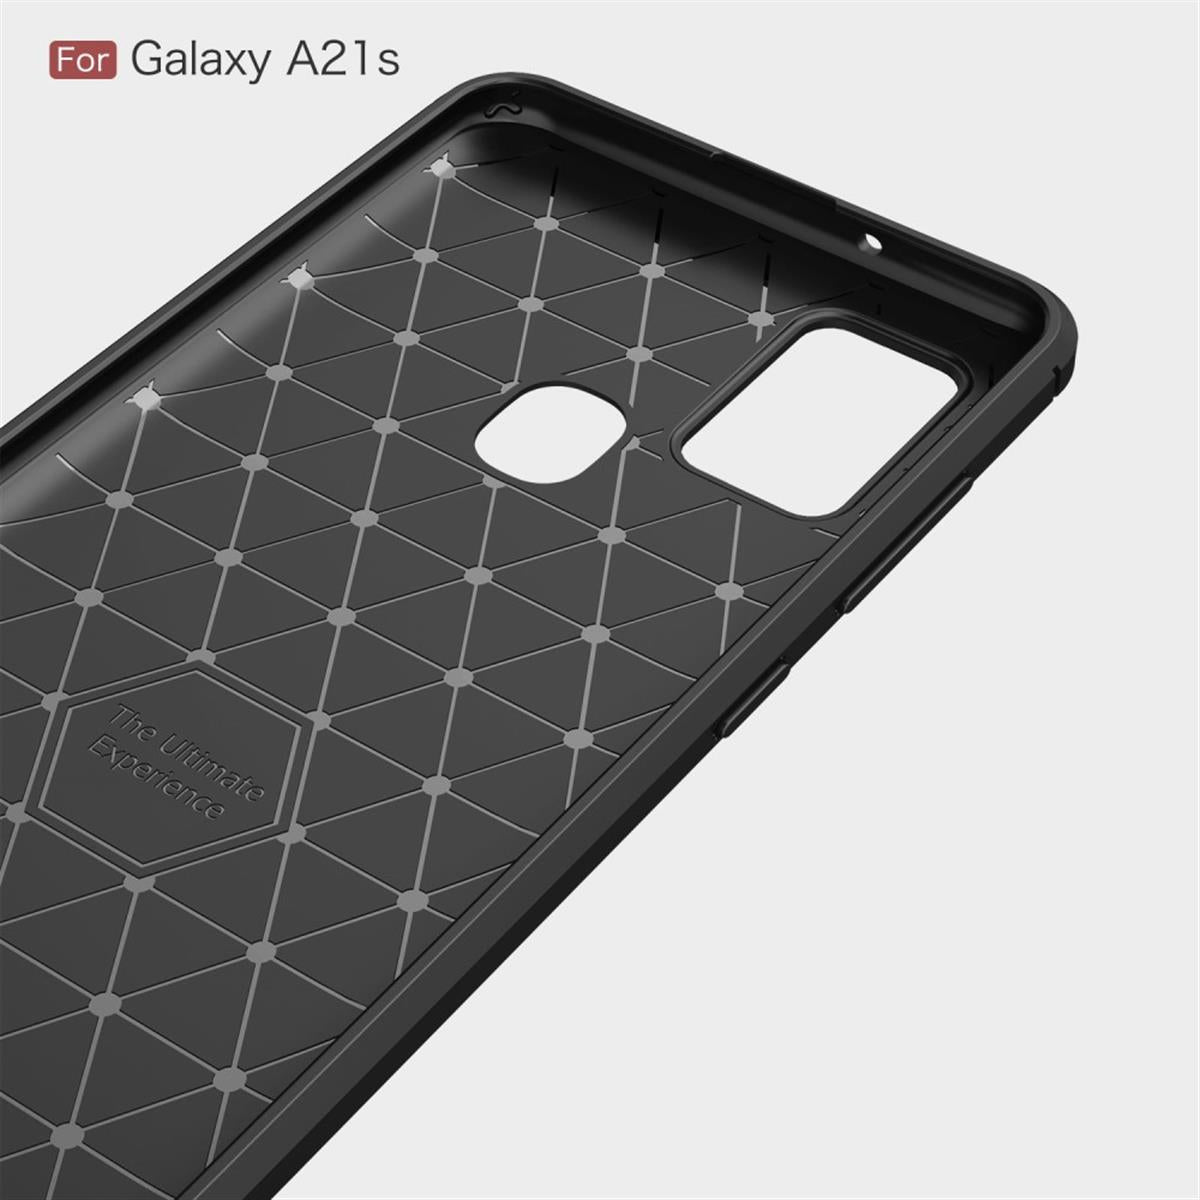 Hülle für Samsung Galaxy A21s Handyhülle Silikon Case Cover Bumper Carbonfarben